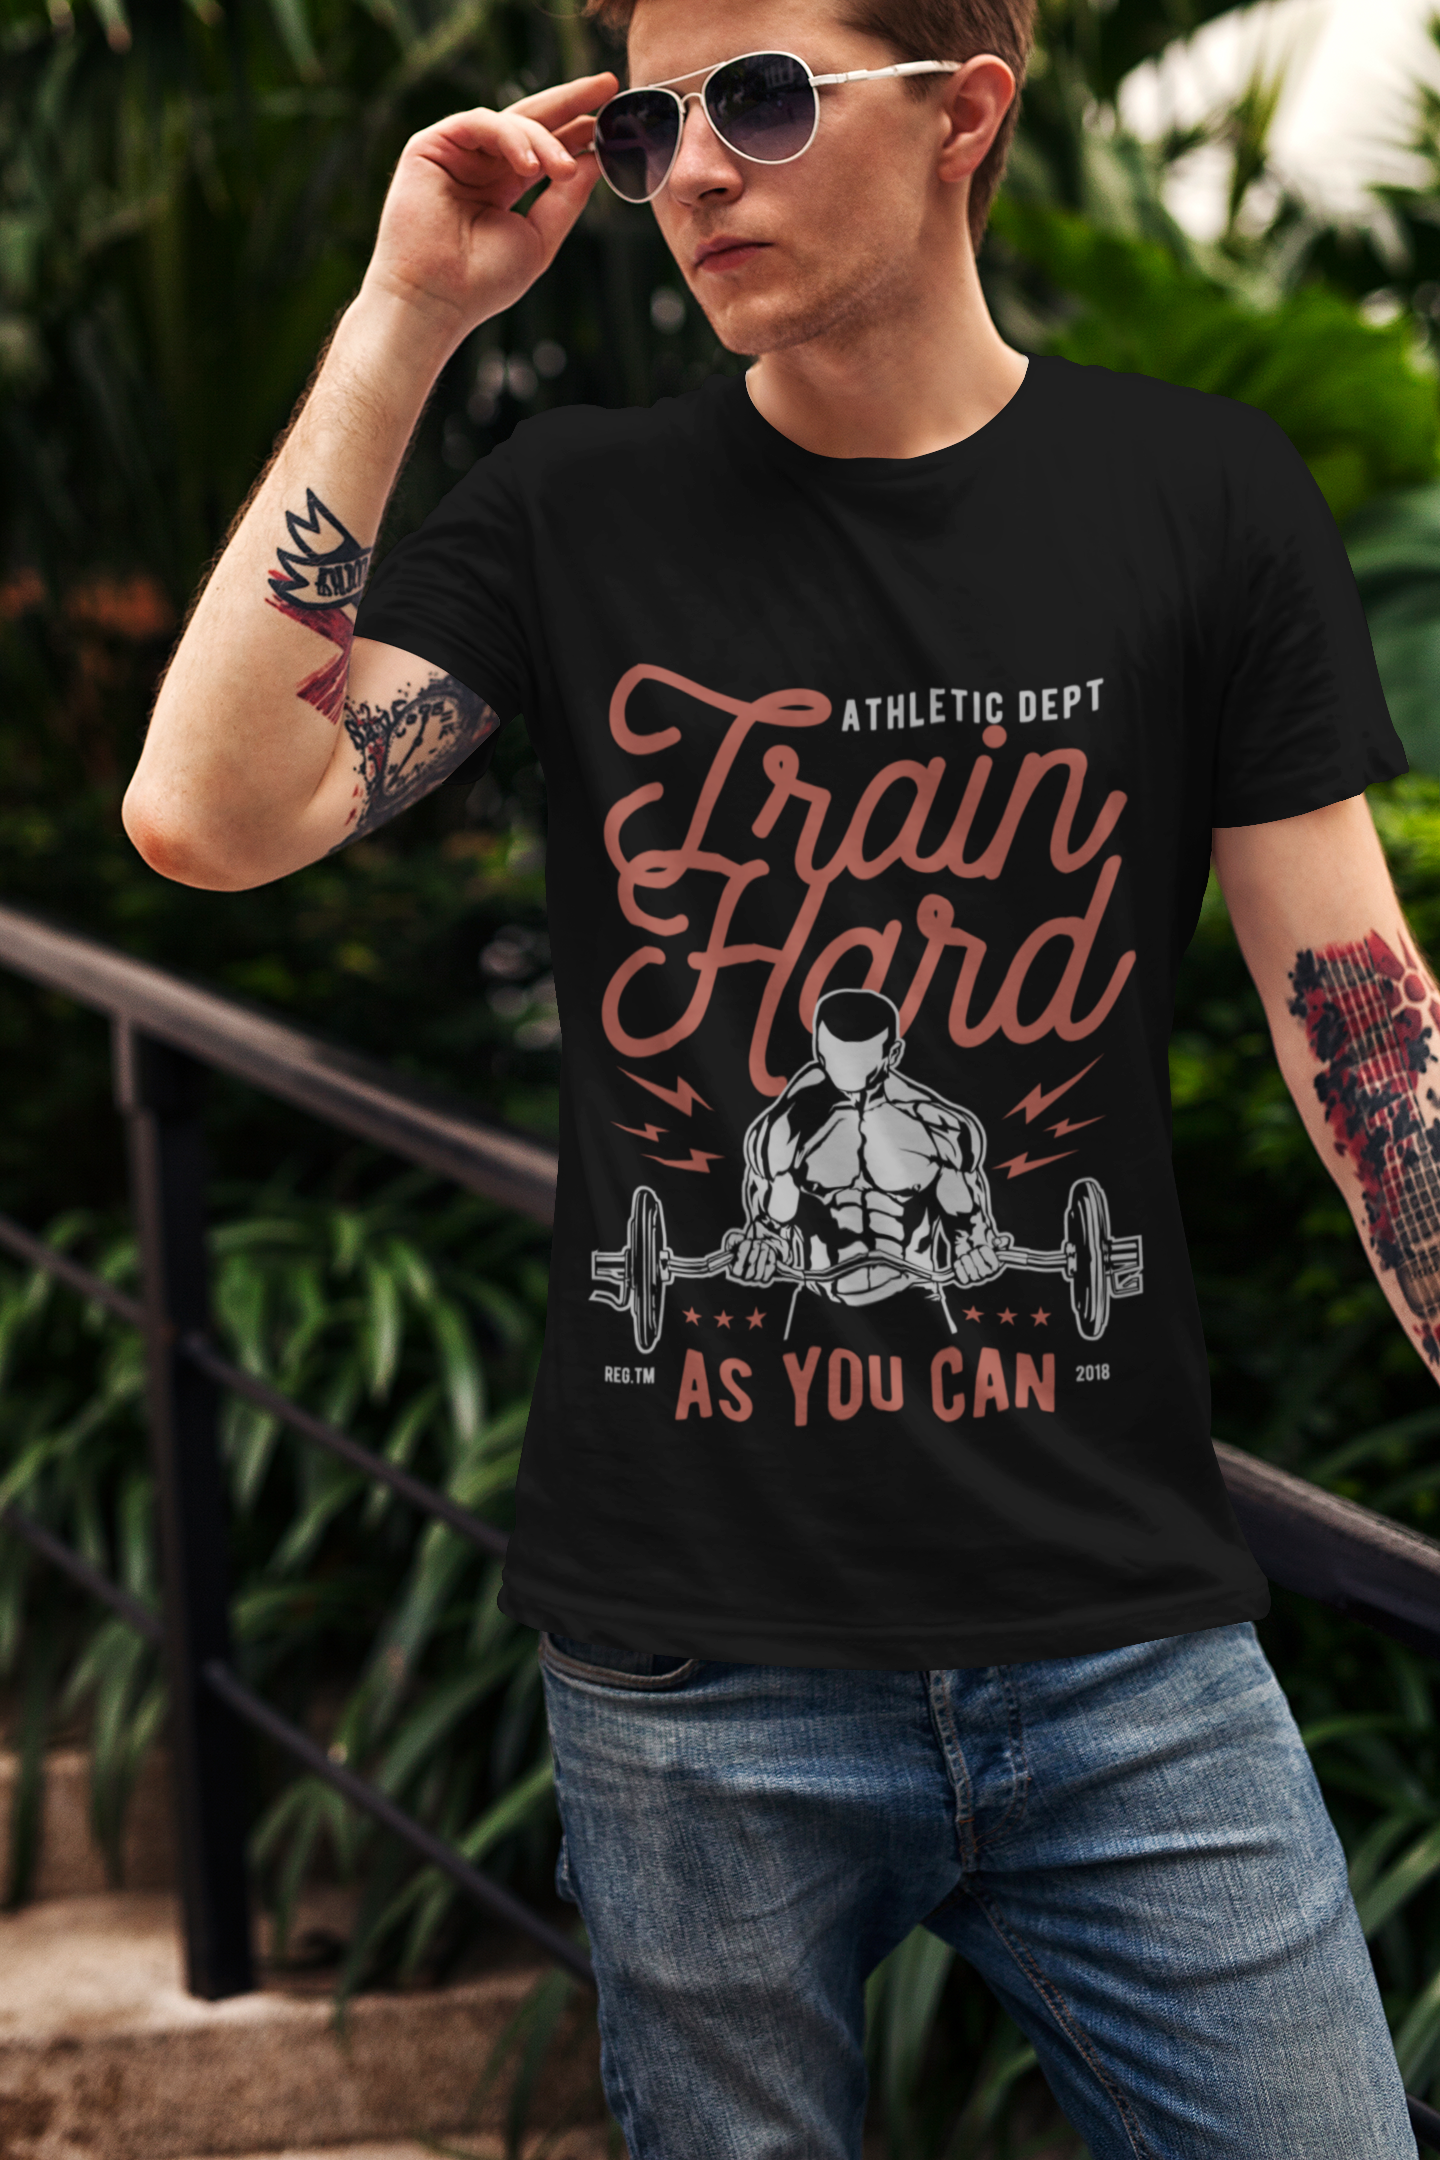 ULTRABASIC Herren-T-Shirt Train Hard As You Can – Motivations-T-Shirt für sportliches Fitnessstudio